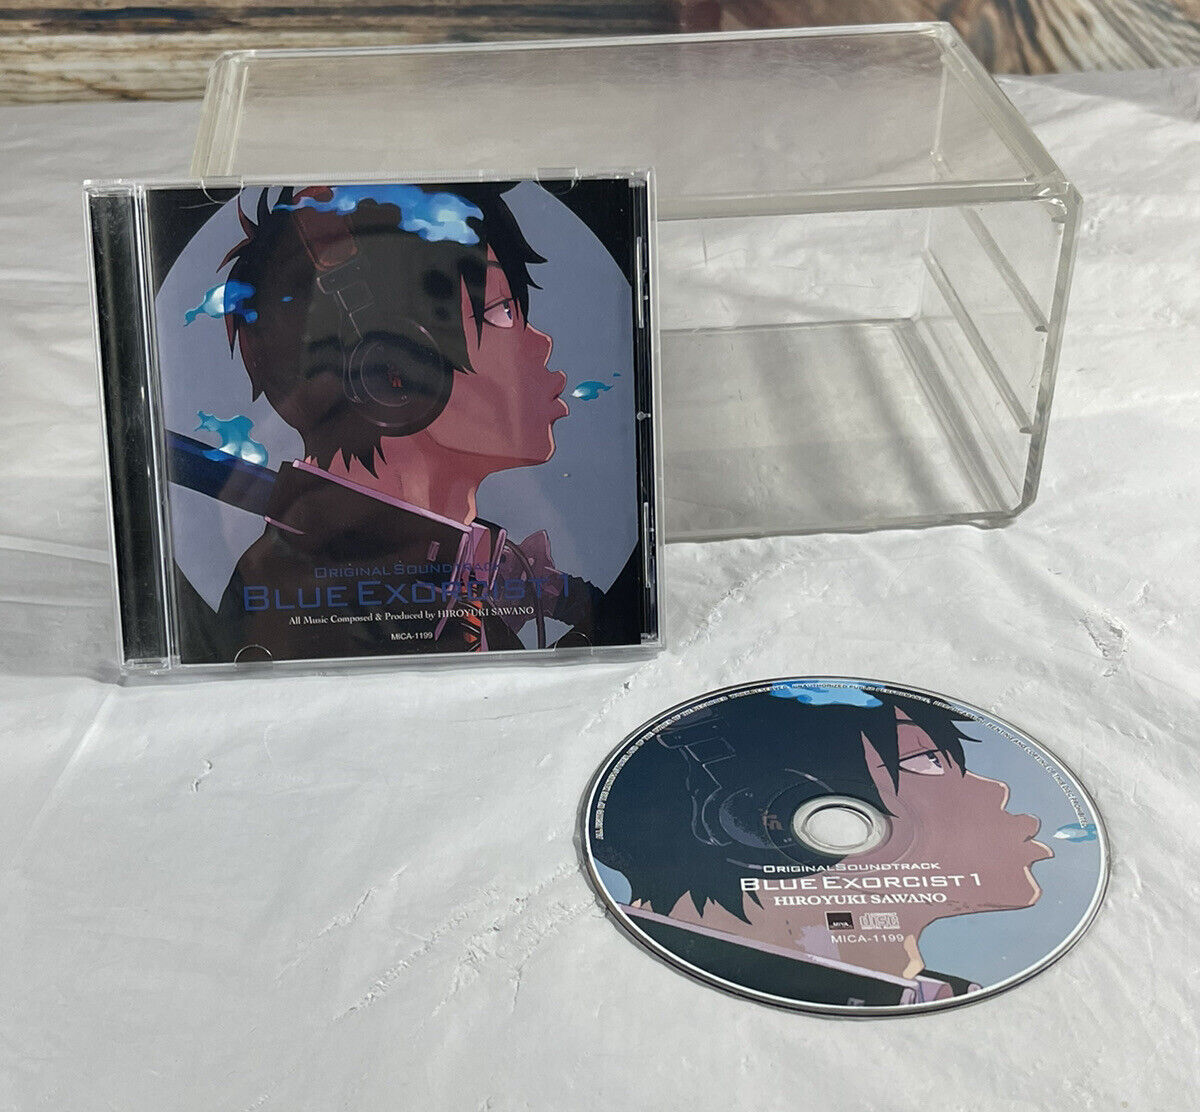 Blue Exorcist 1 original soundtrack ANIME CD Collectible